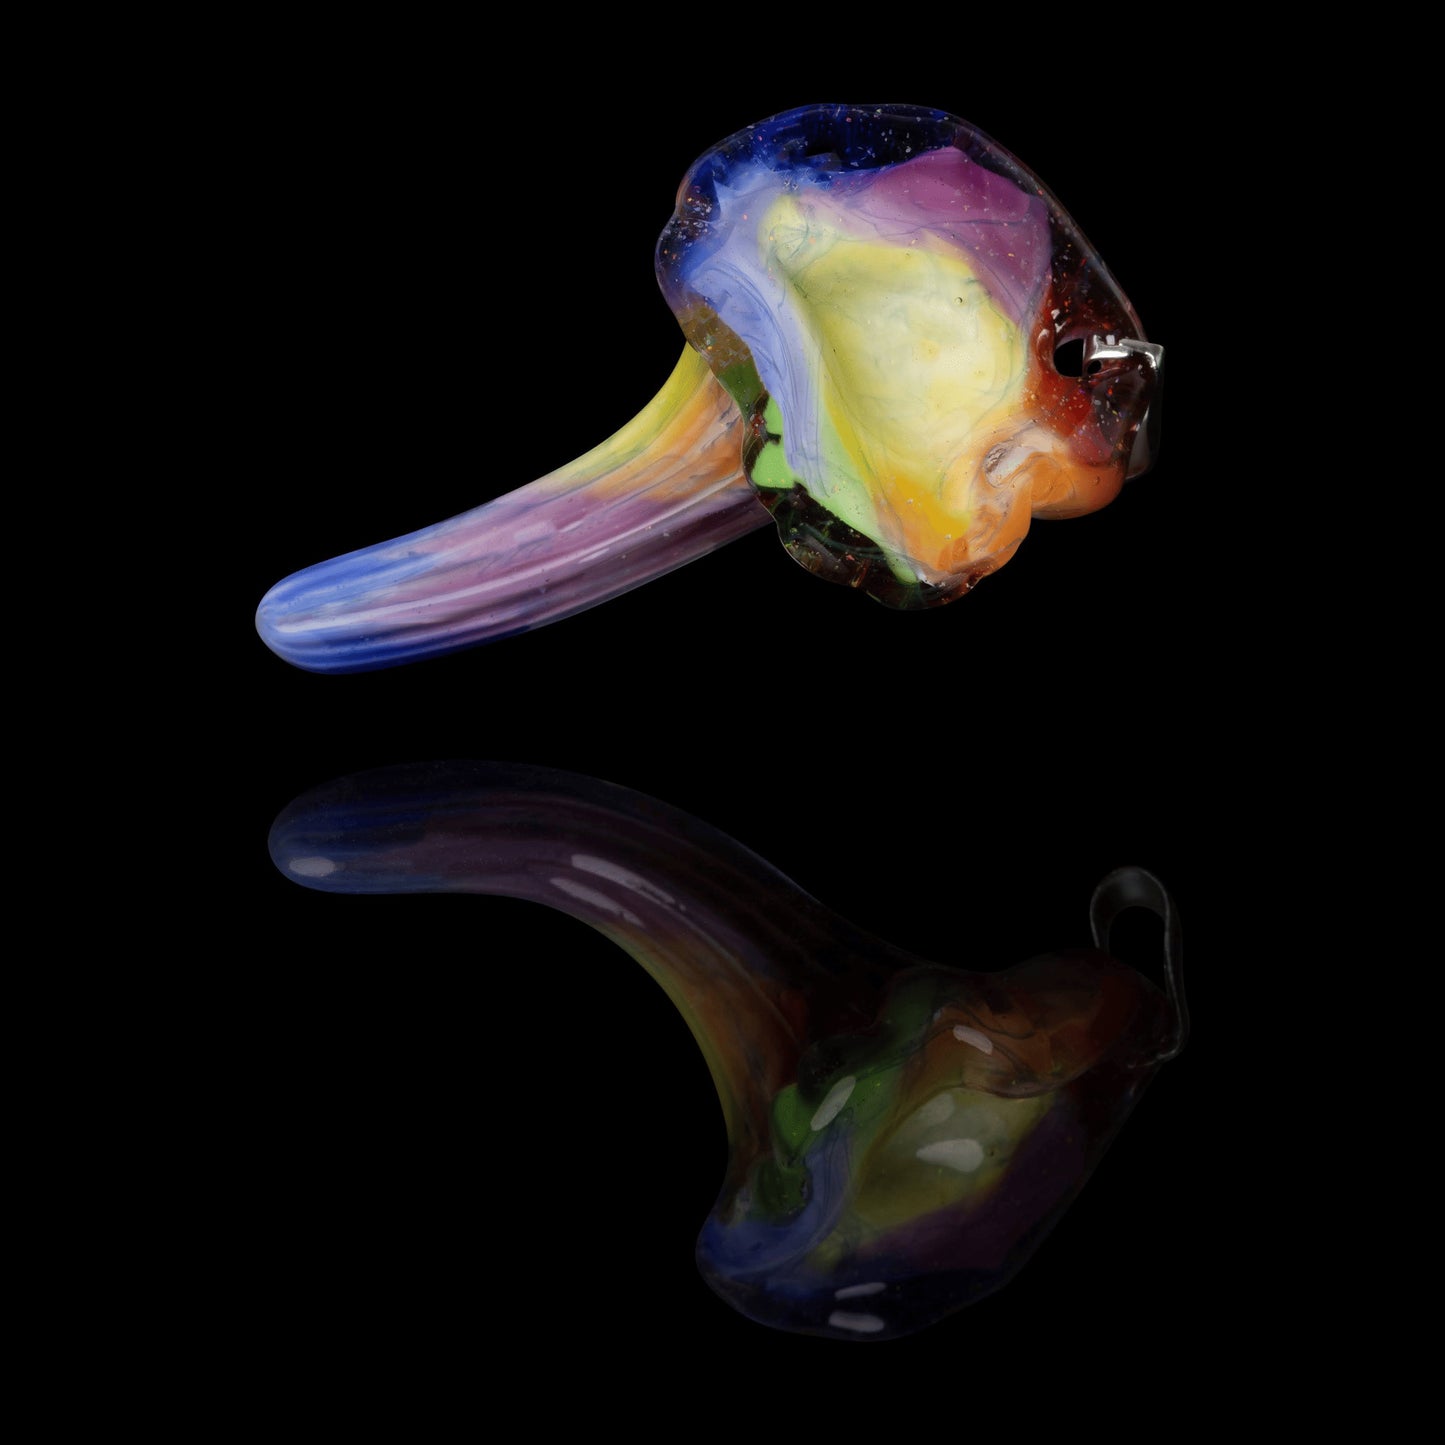 exquisite glass pendant - Solo Mushroom Pendant (A) by Scomo Moanet (Scribble Season 2022)